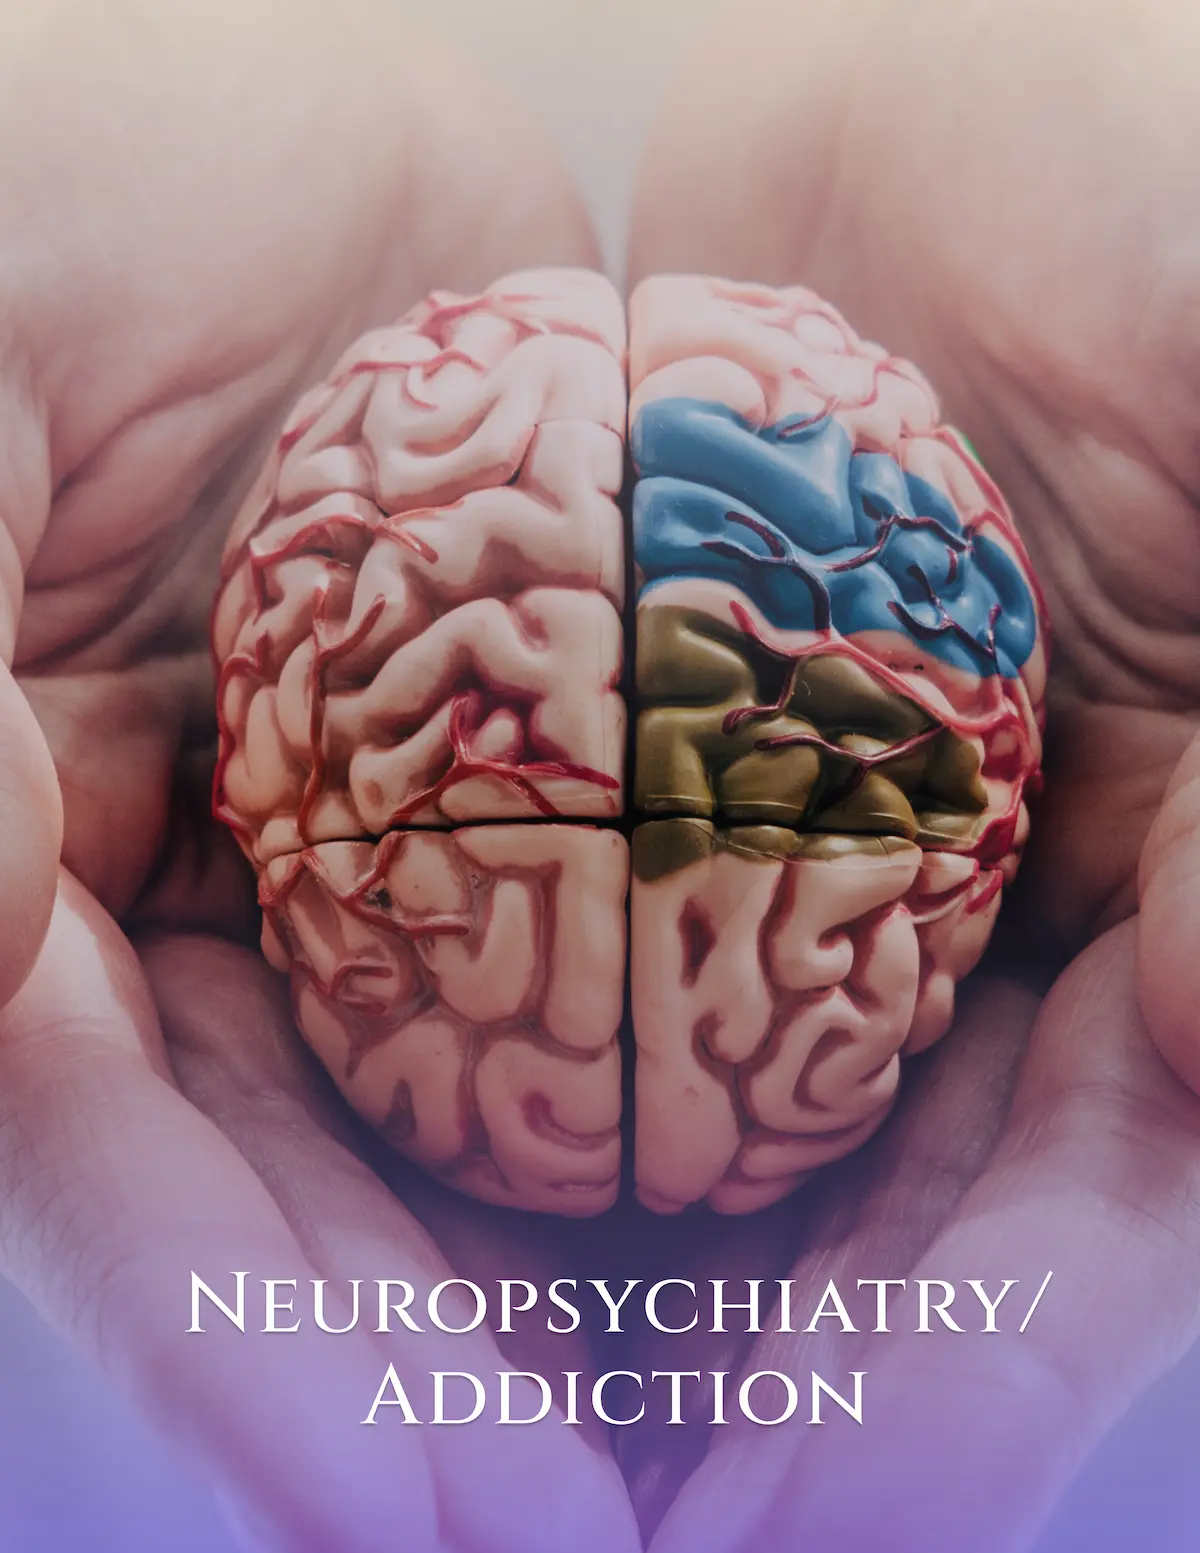 Neuropsychiatry/Addiction (Addiction Therapy)